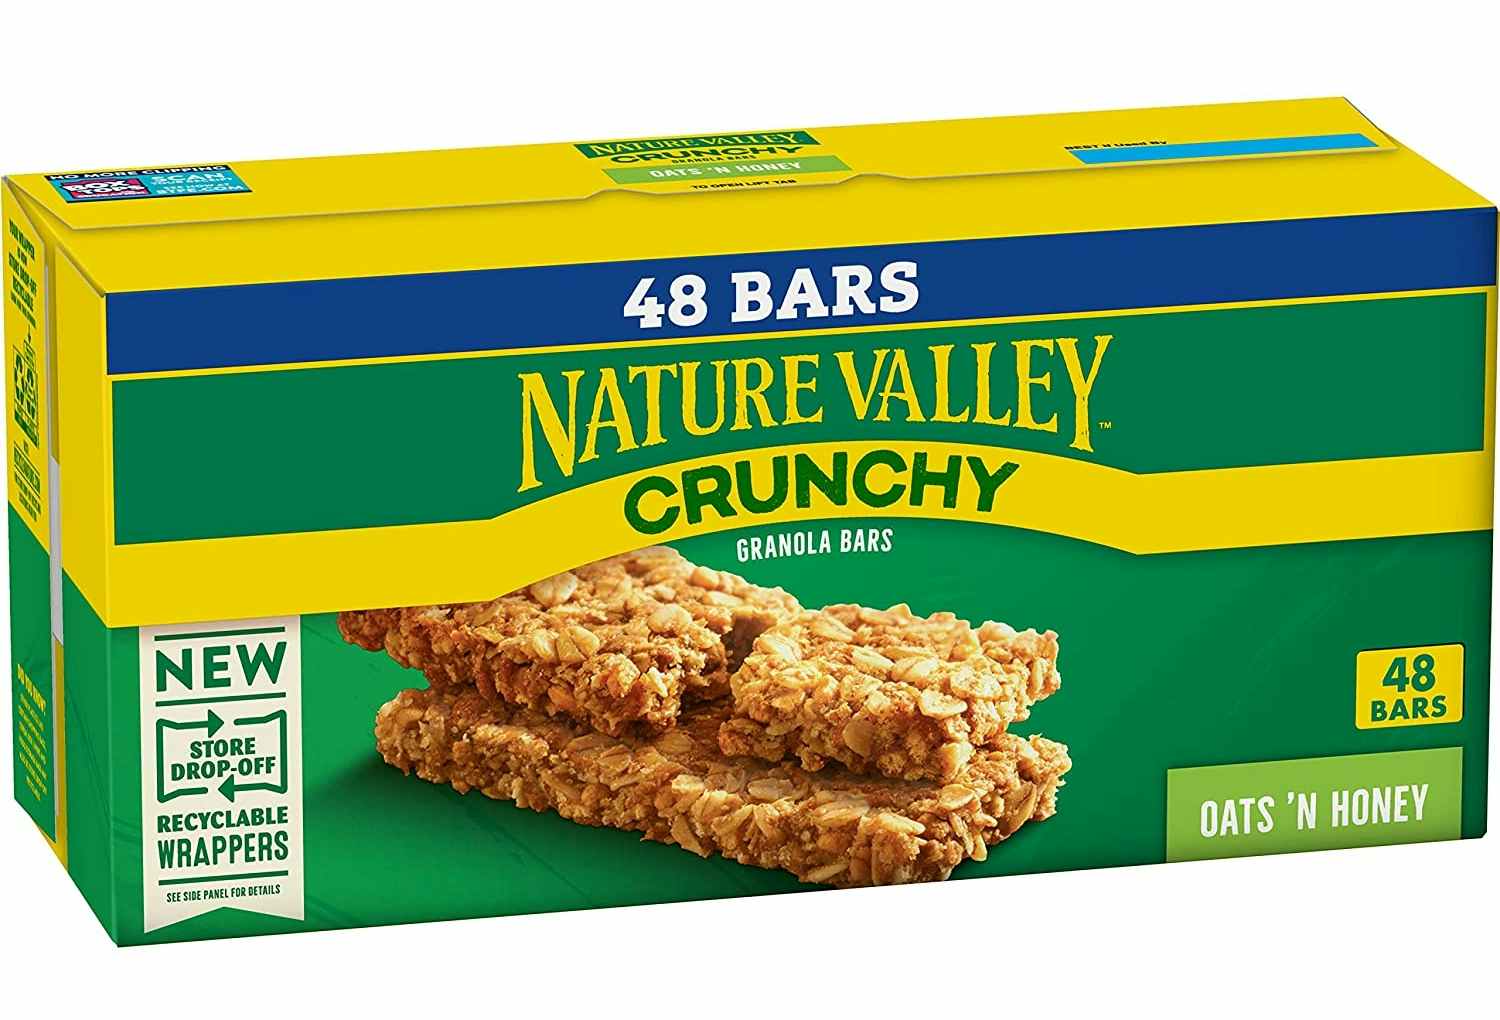 A box of Nature Valley Crunchy granola bars.